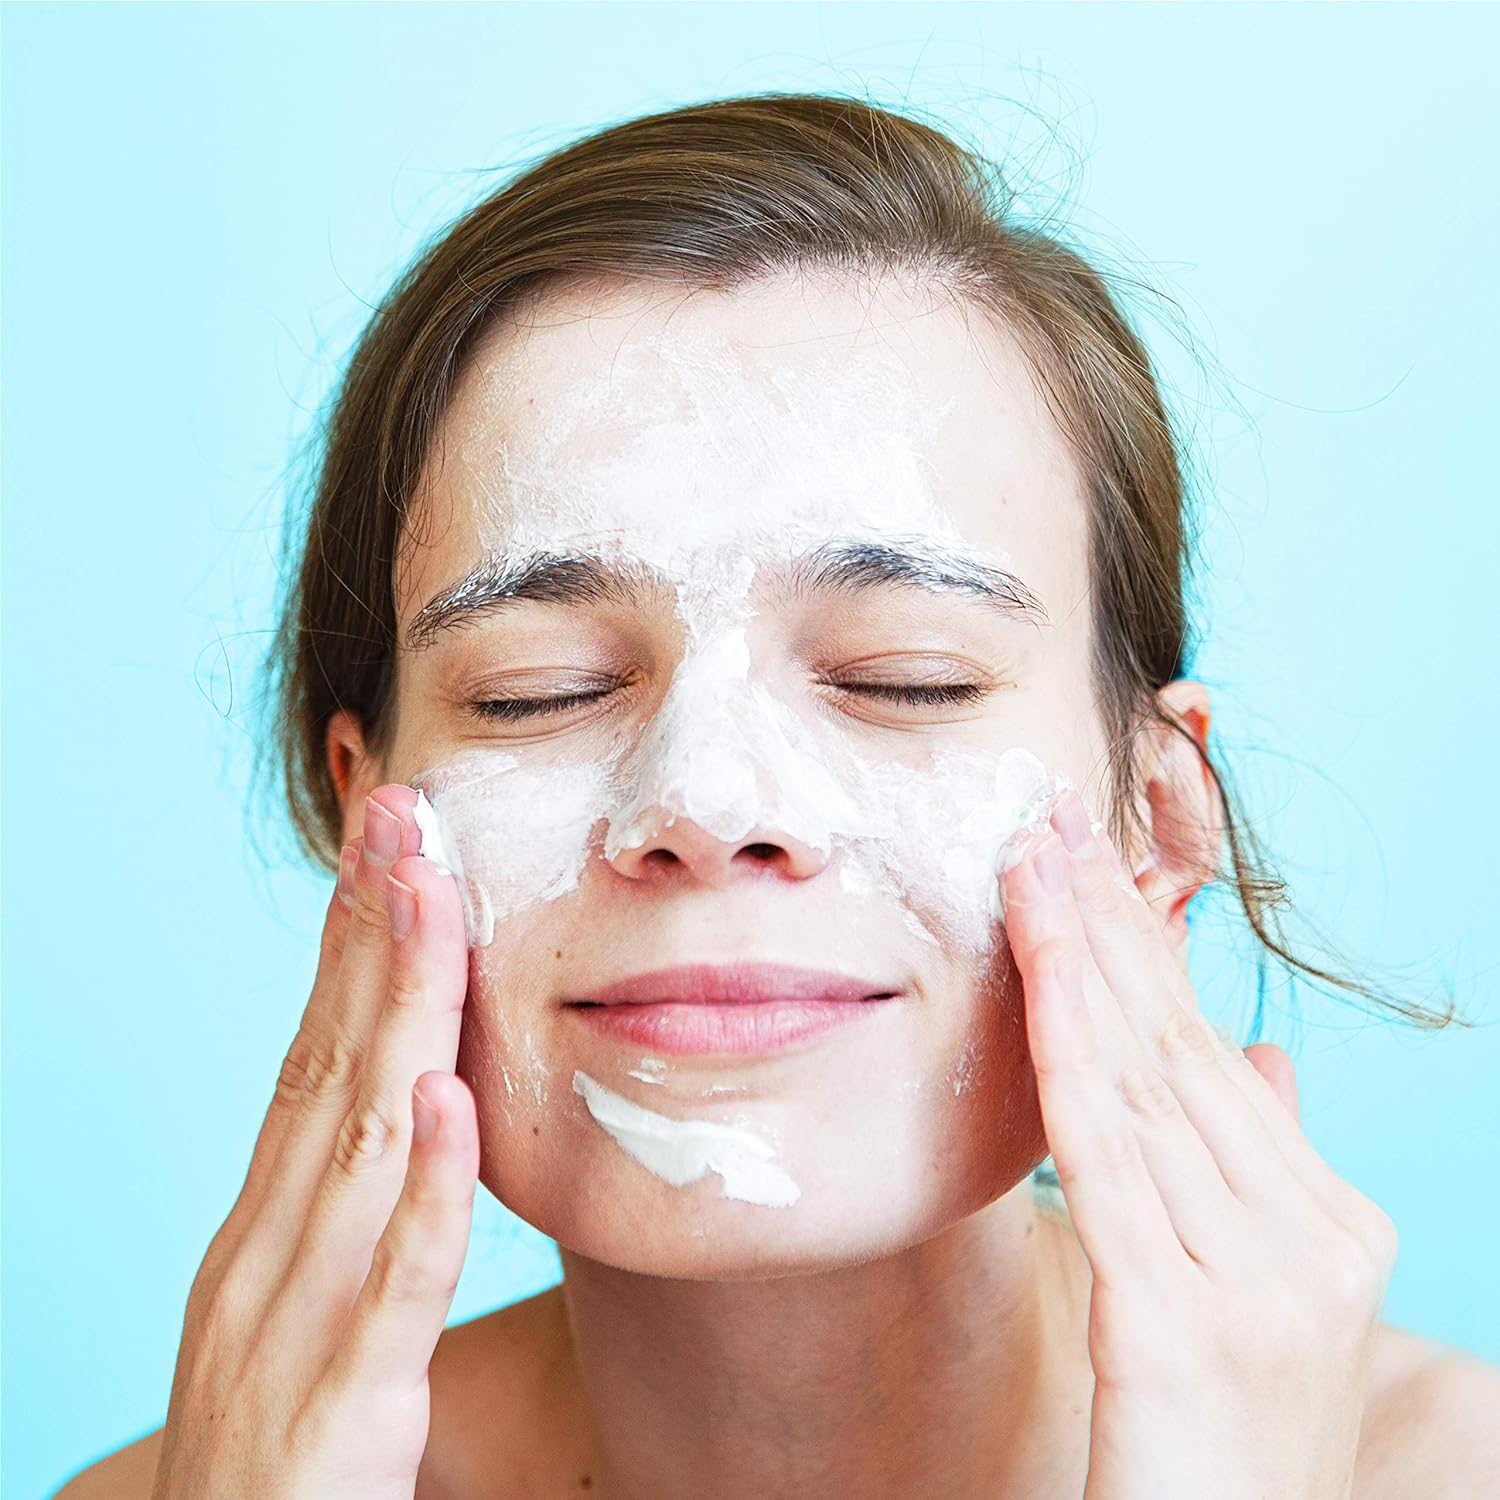 Neutrogena Oil-Free Acne Face Scrub, 2% Salicylic Acid Acne Treatment Medicine, Daily Face Wash to help Prevent Breakouts, Oil Free Exfoliating Facial Cleanser for Acne-Prone Skin, 4.2 fl. oz